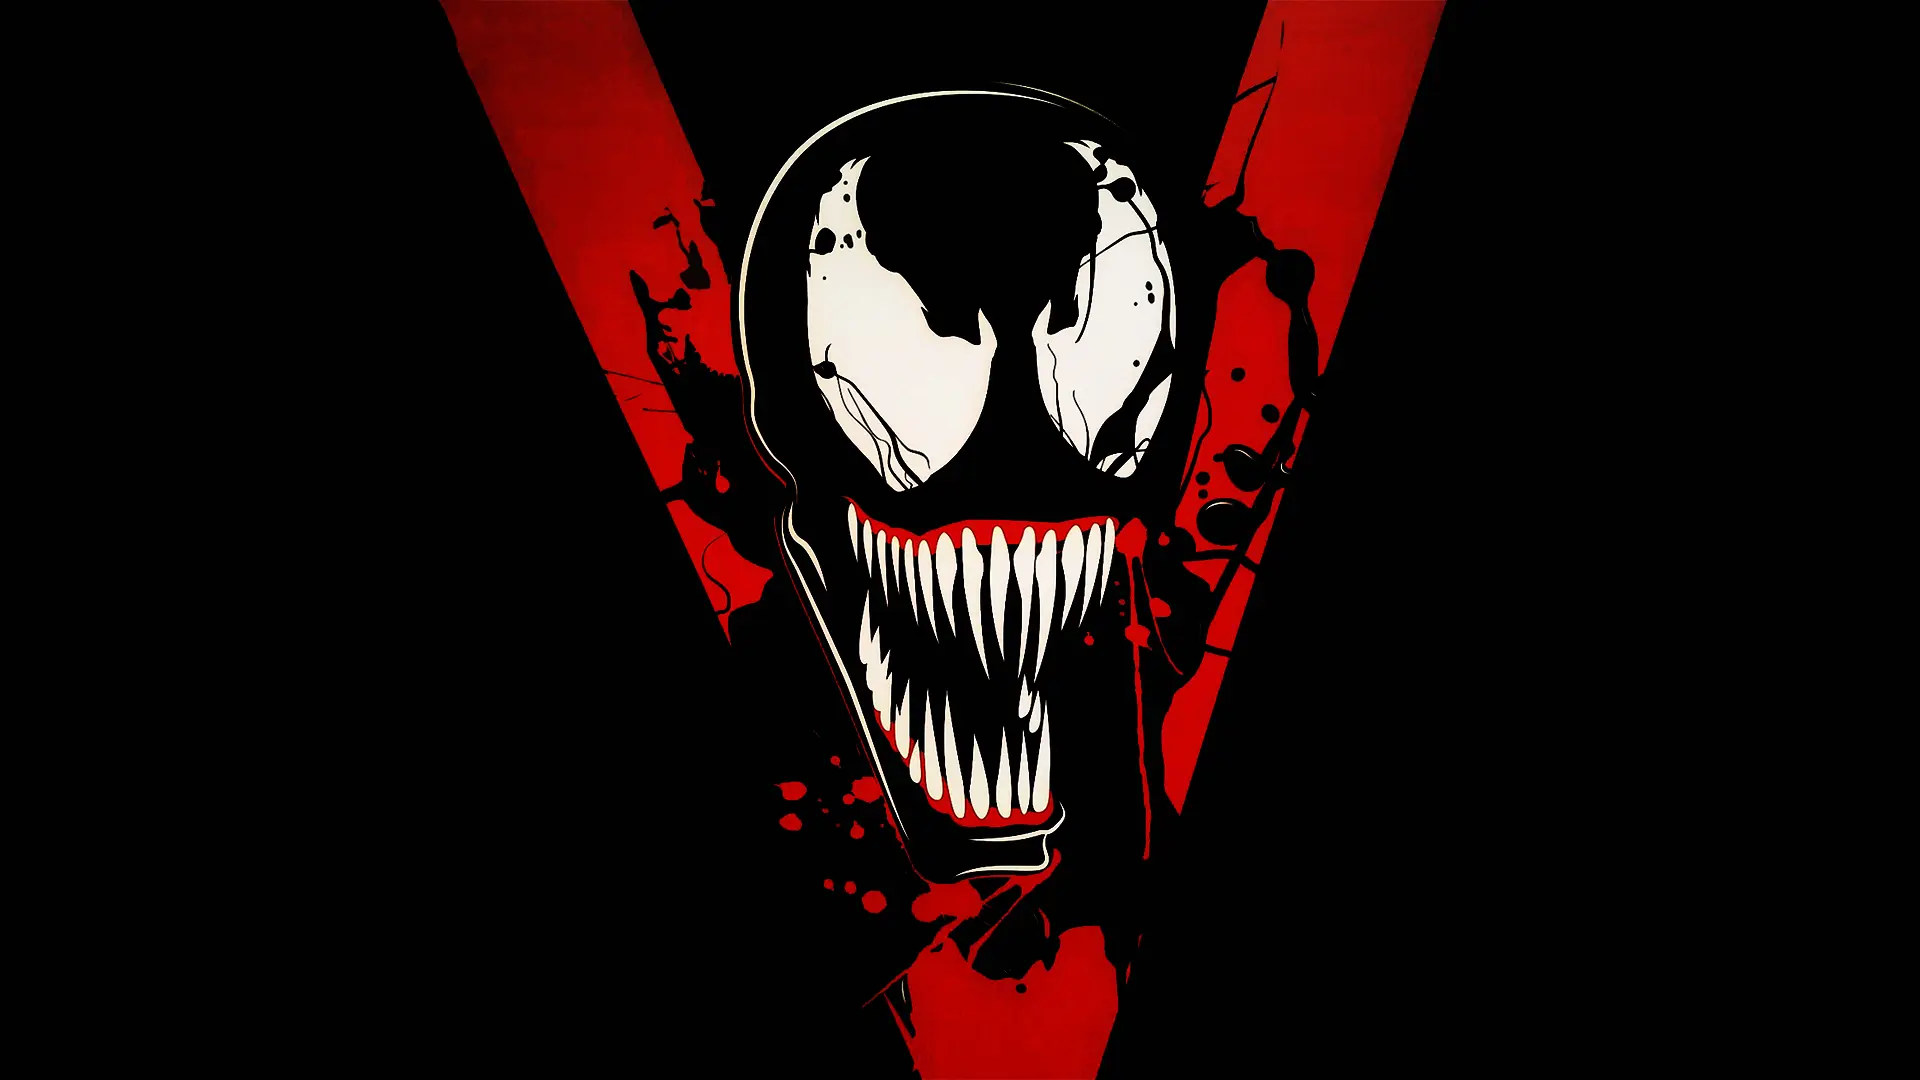 Venom movie background 4